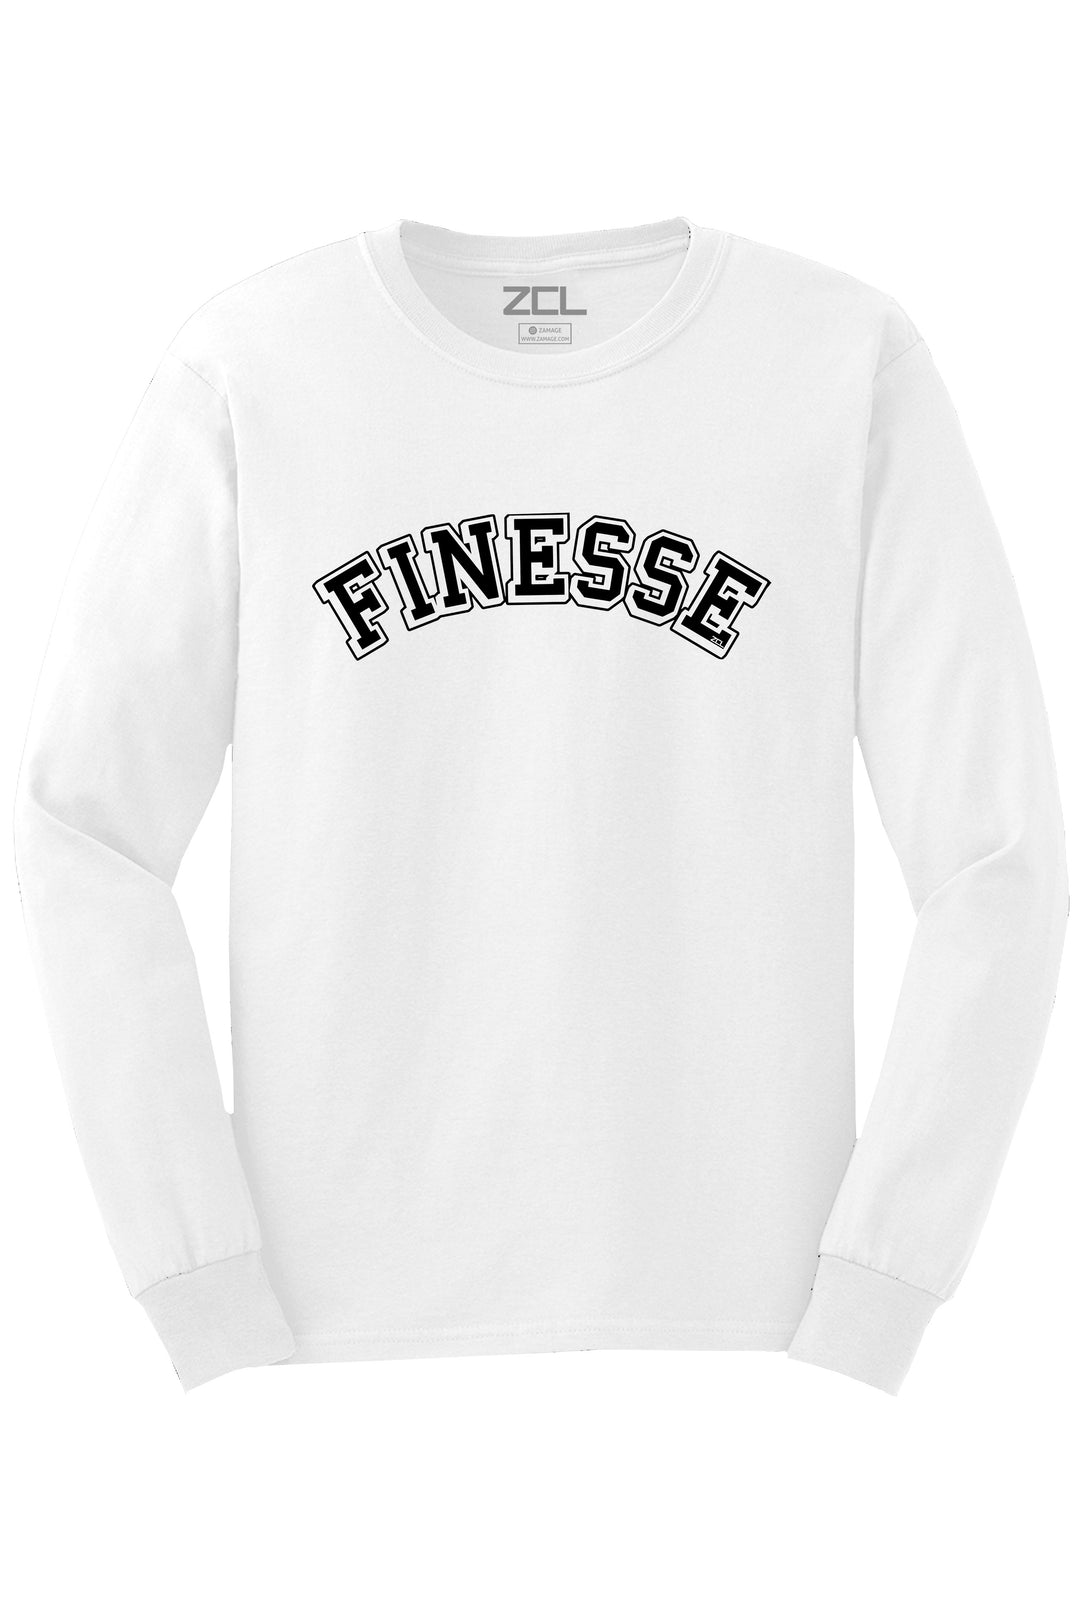 Finesse Long Sleeve Tee (Black Logo) - Zamage